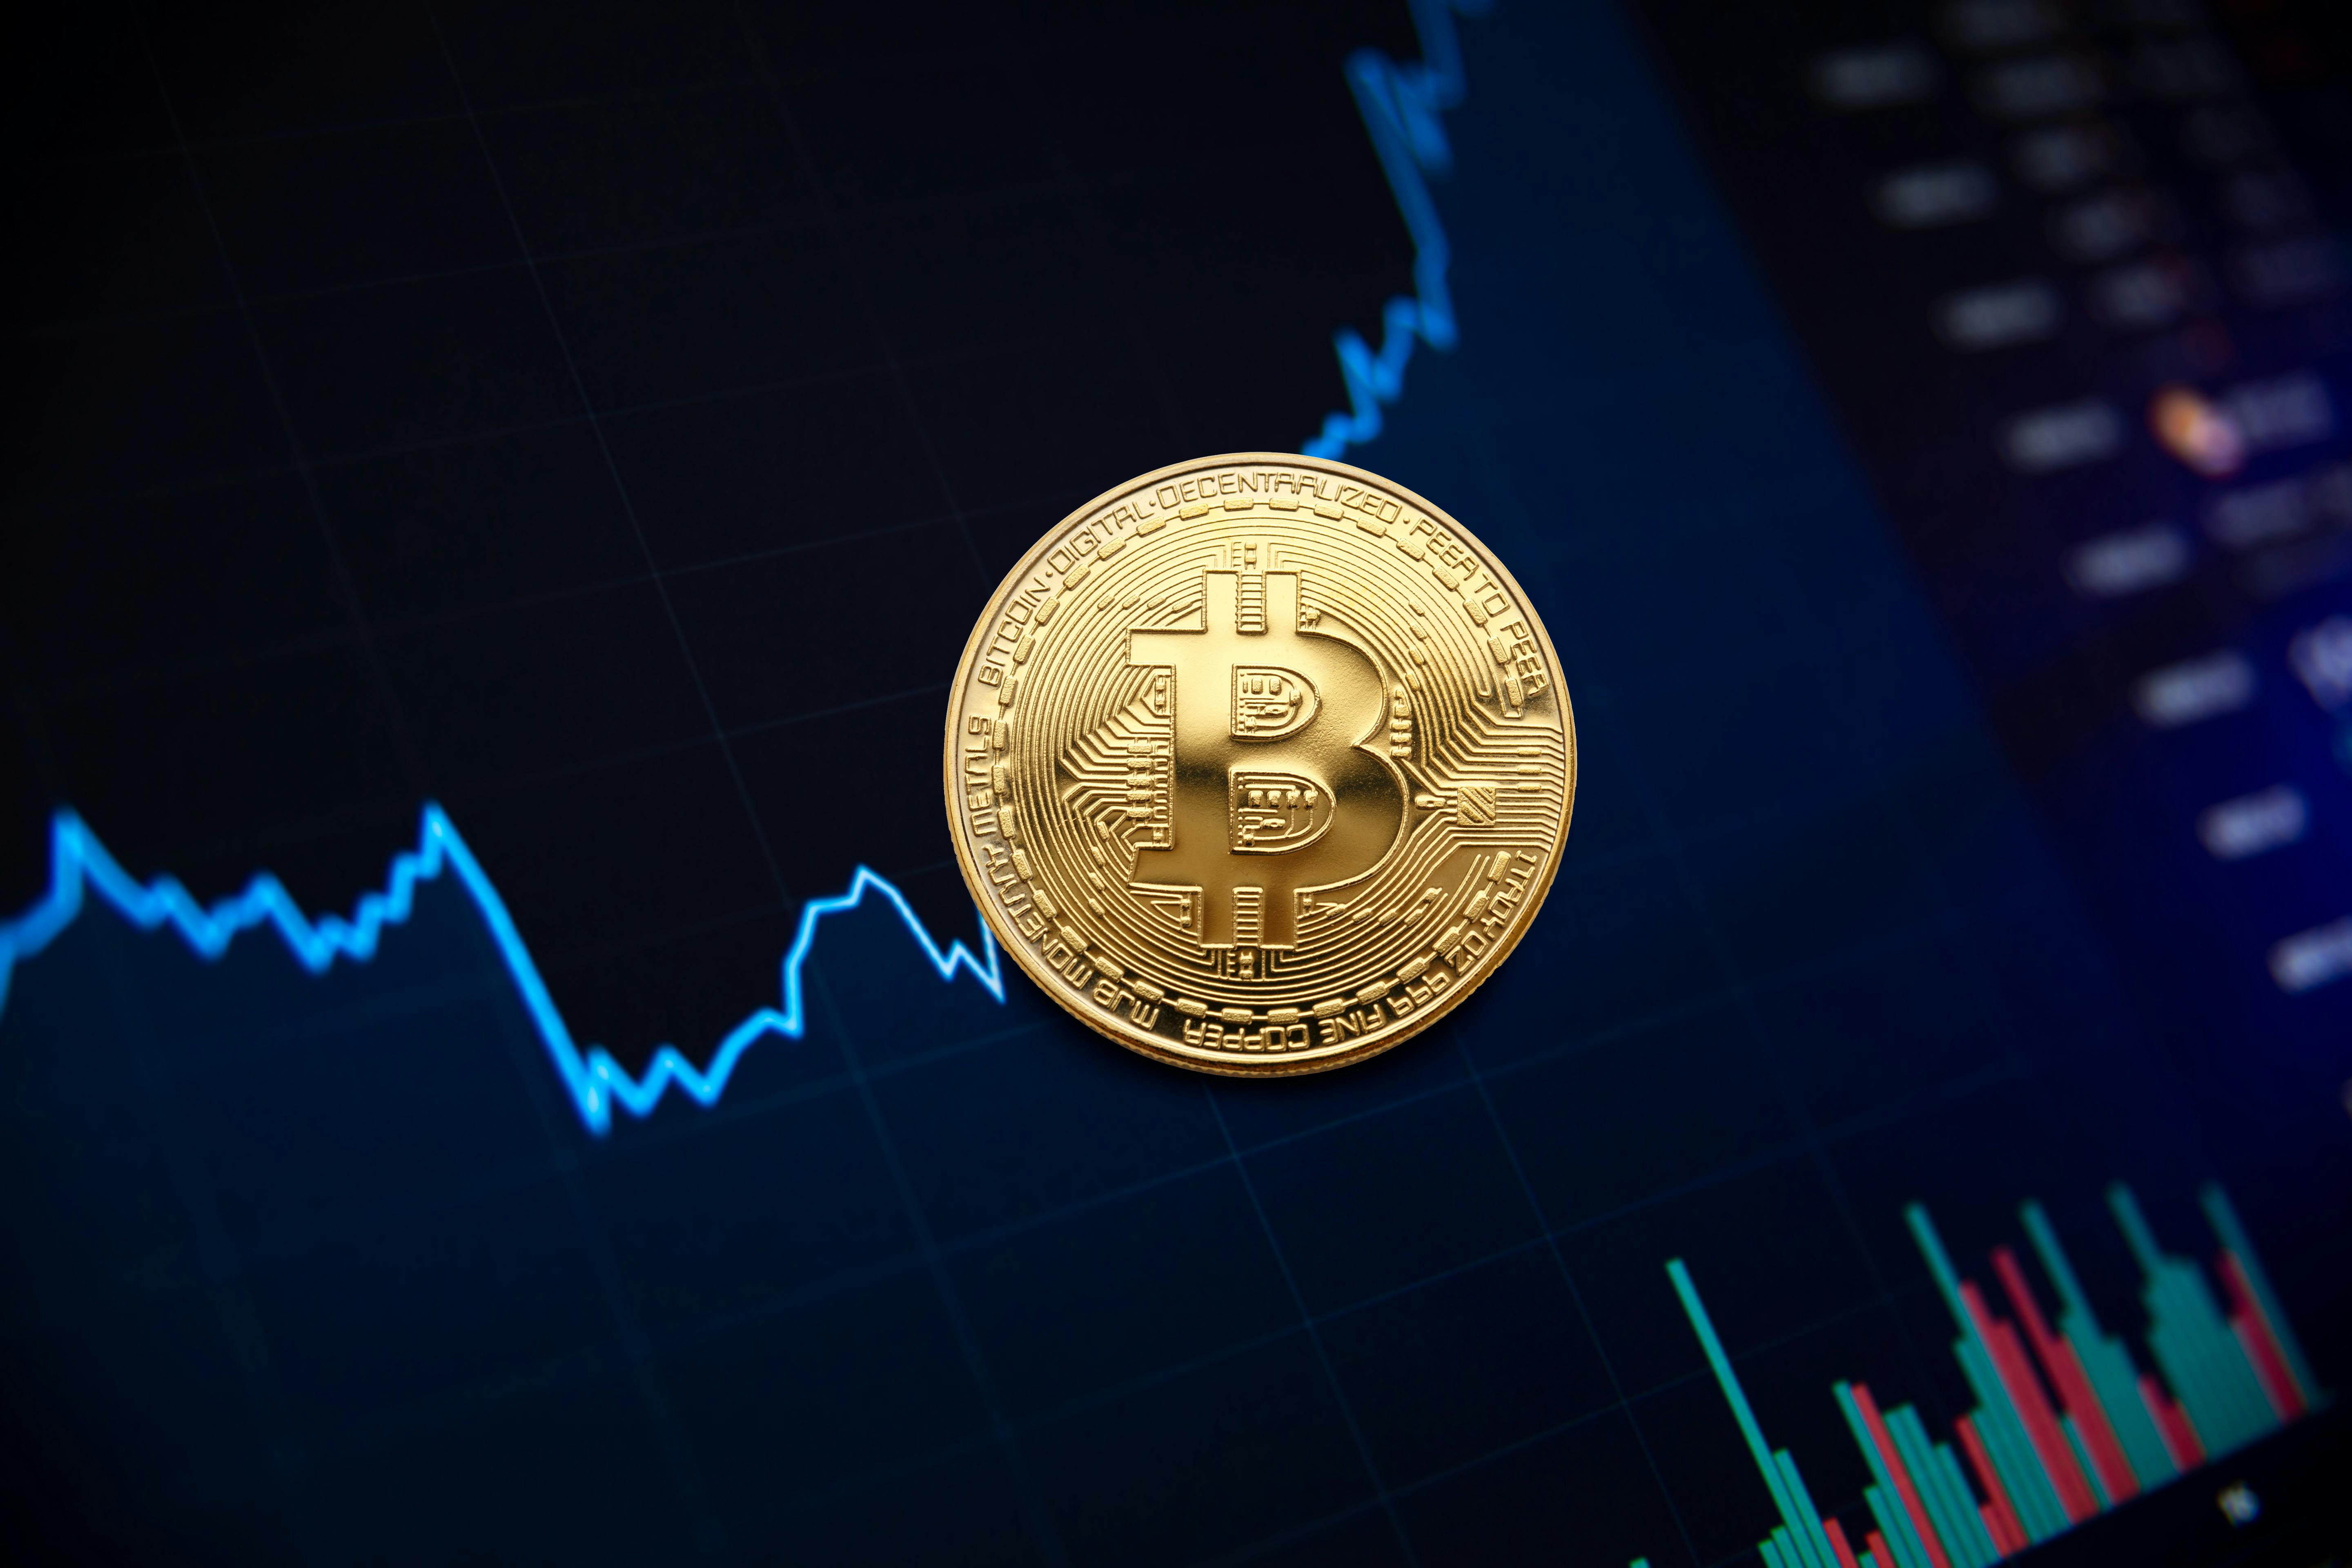 Analyzing Bitcoin Market Data